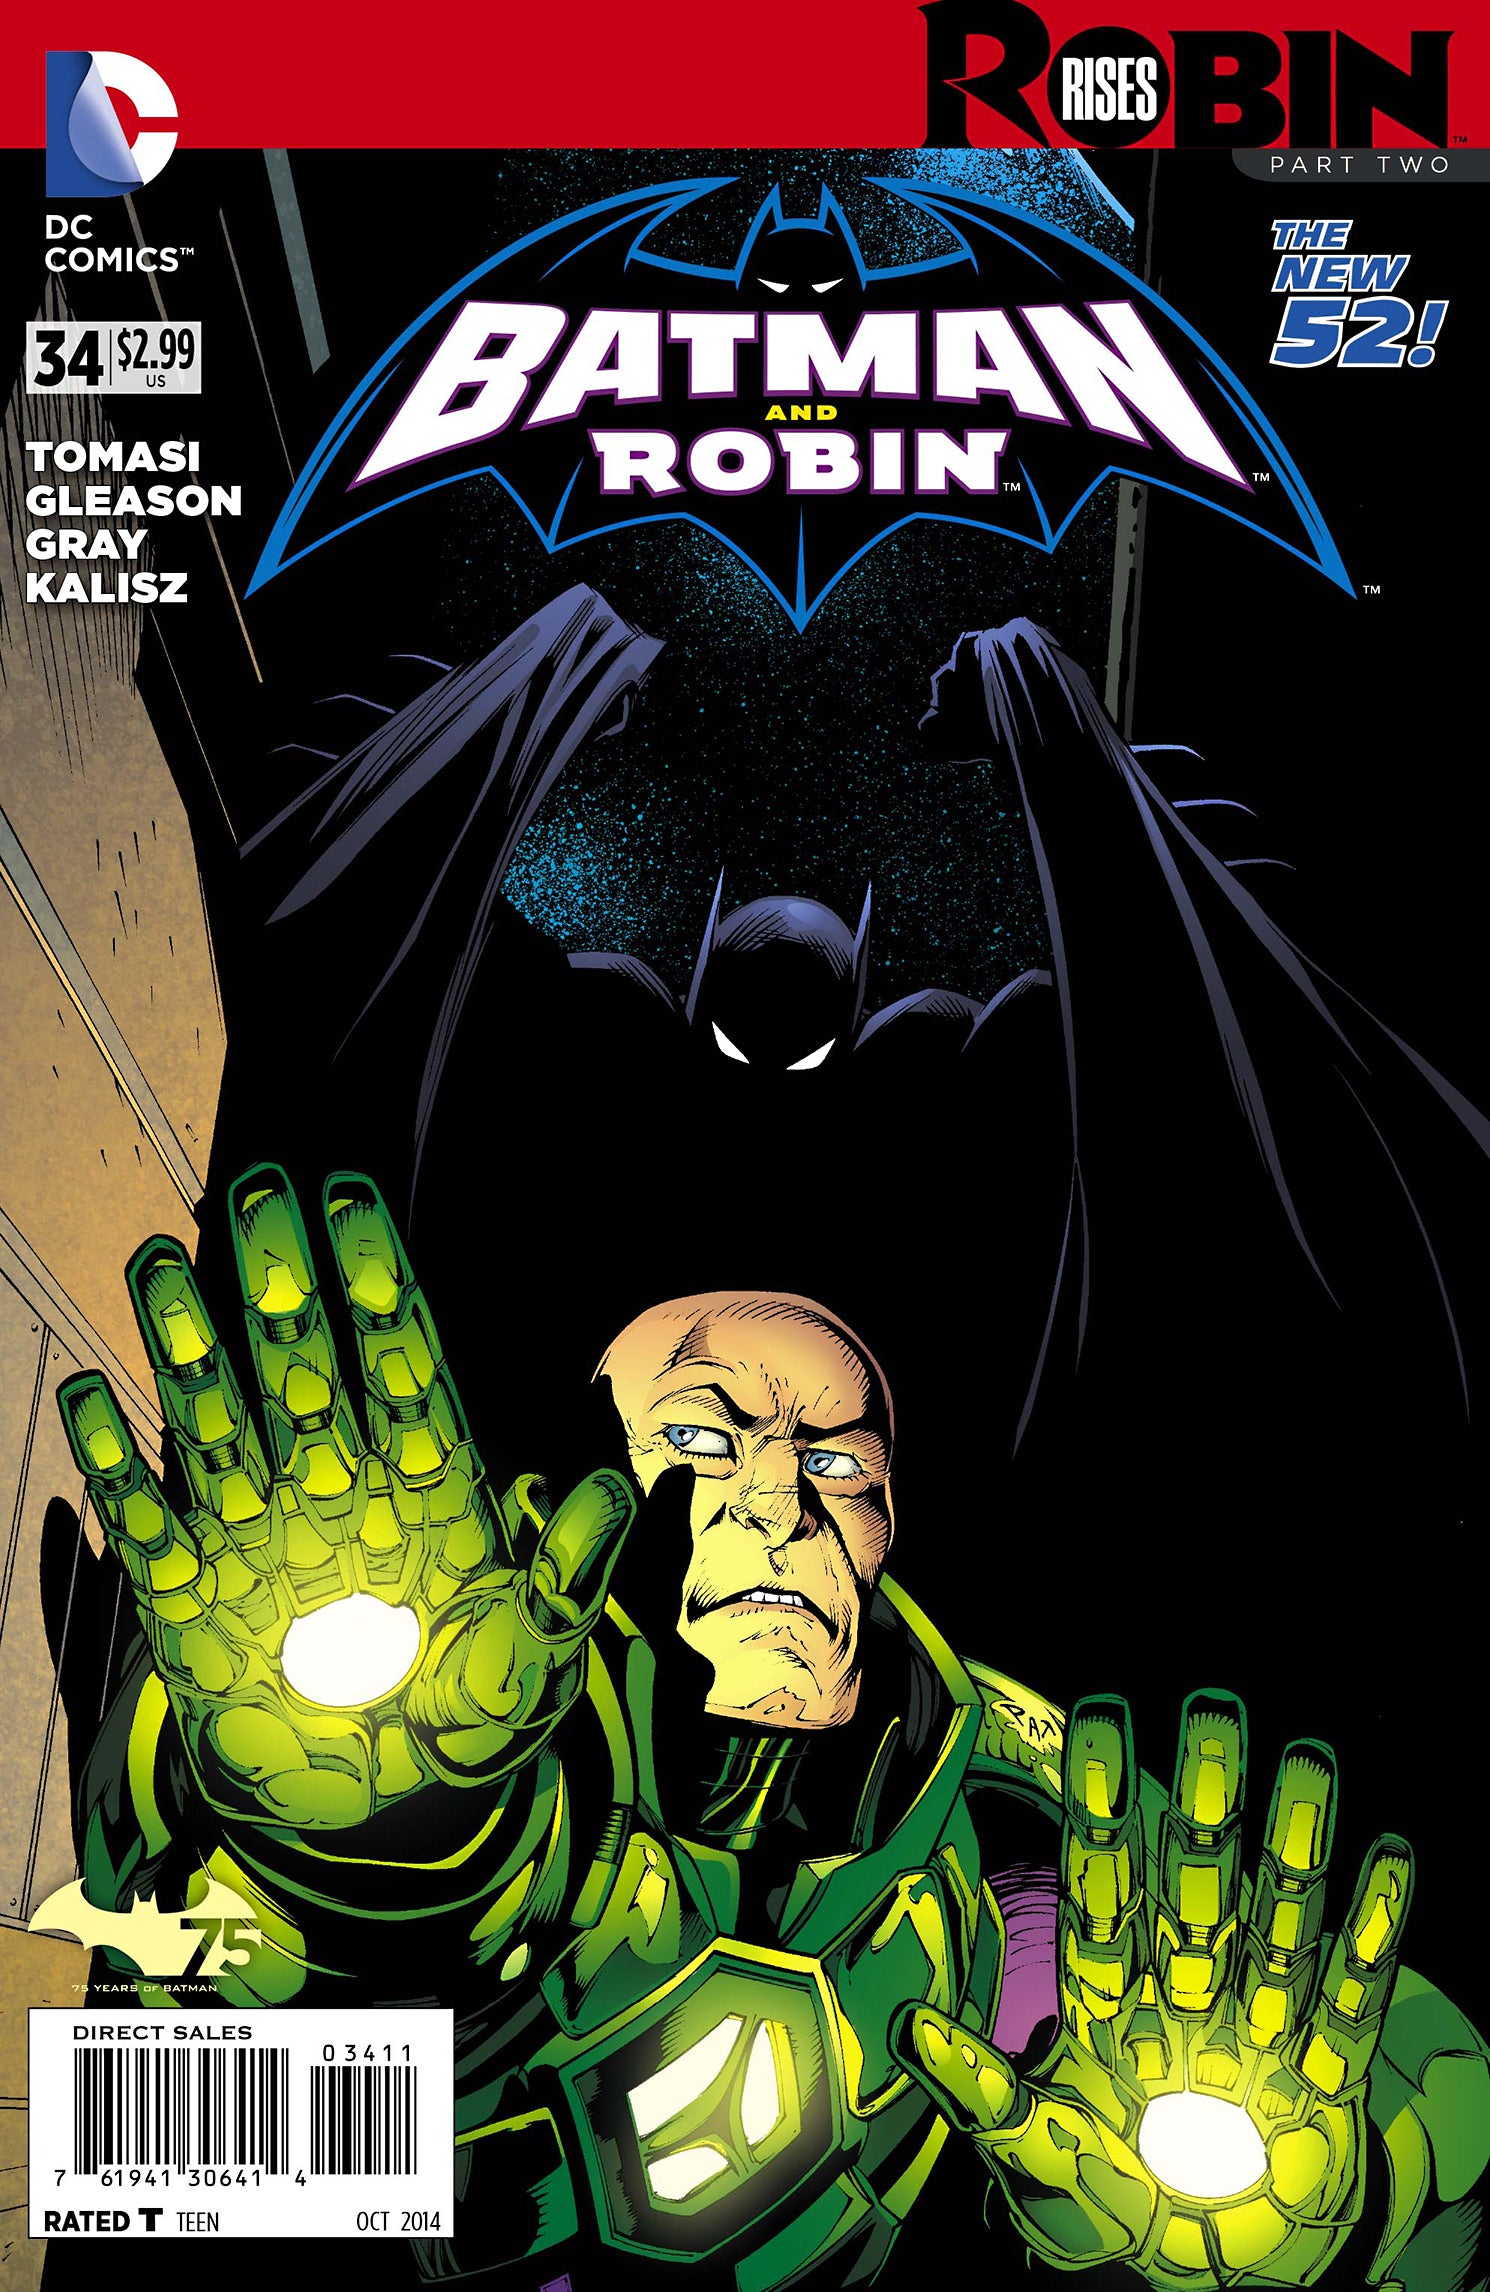 BATMAN AND ROBIN #34 (ROBIN RISES) | Game Master's Emporium (The New GME)